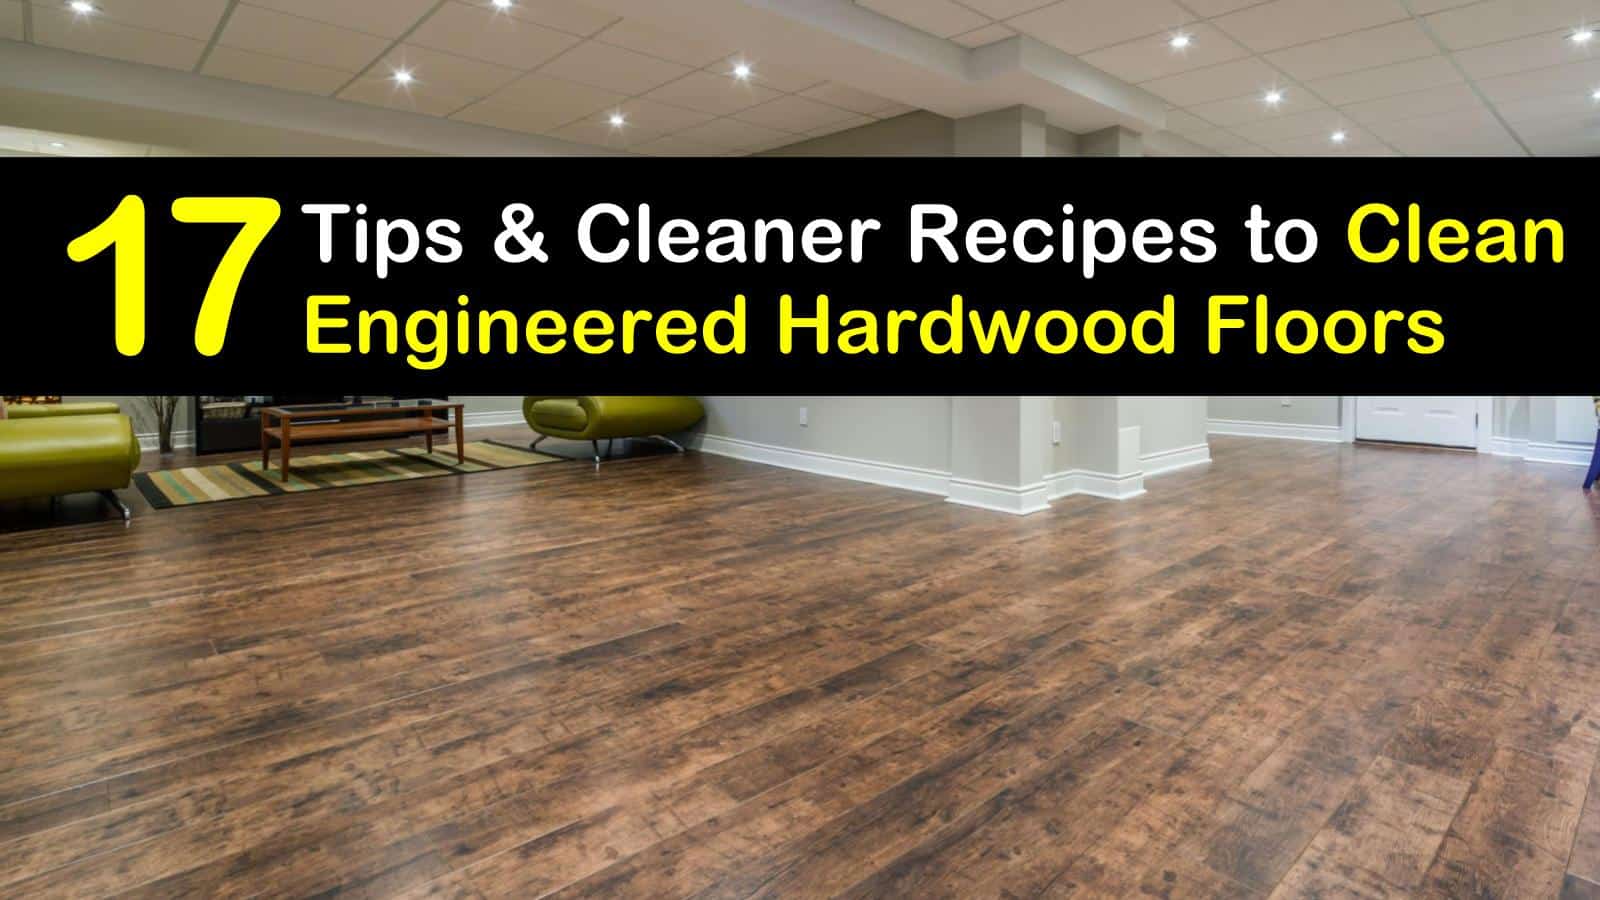 Clean Engineered Hardwood Floors, How To Clean Hardwood Floors With Vinegar And Olive Oil